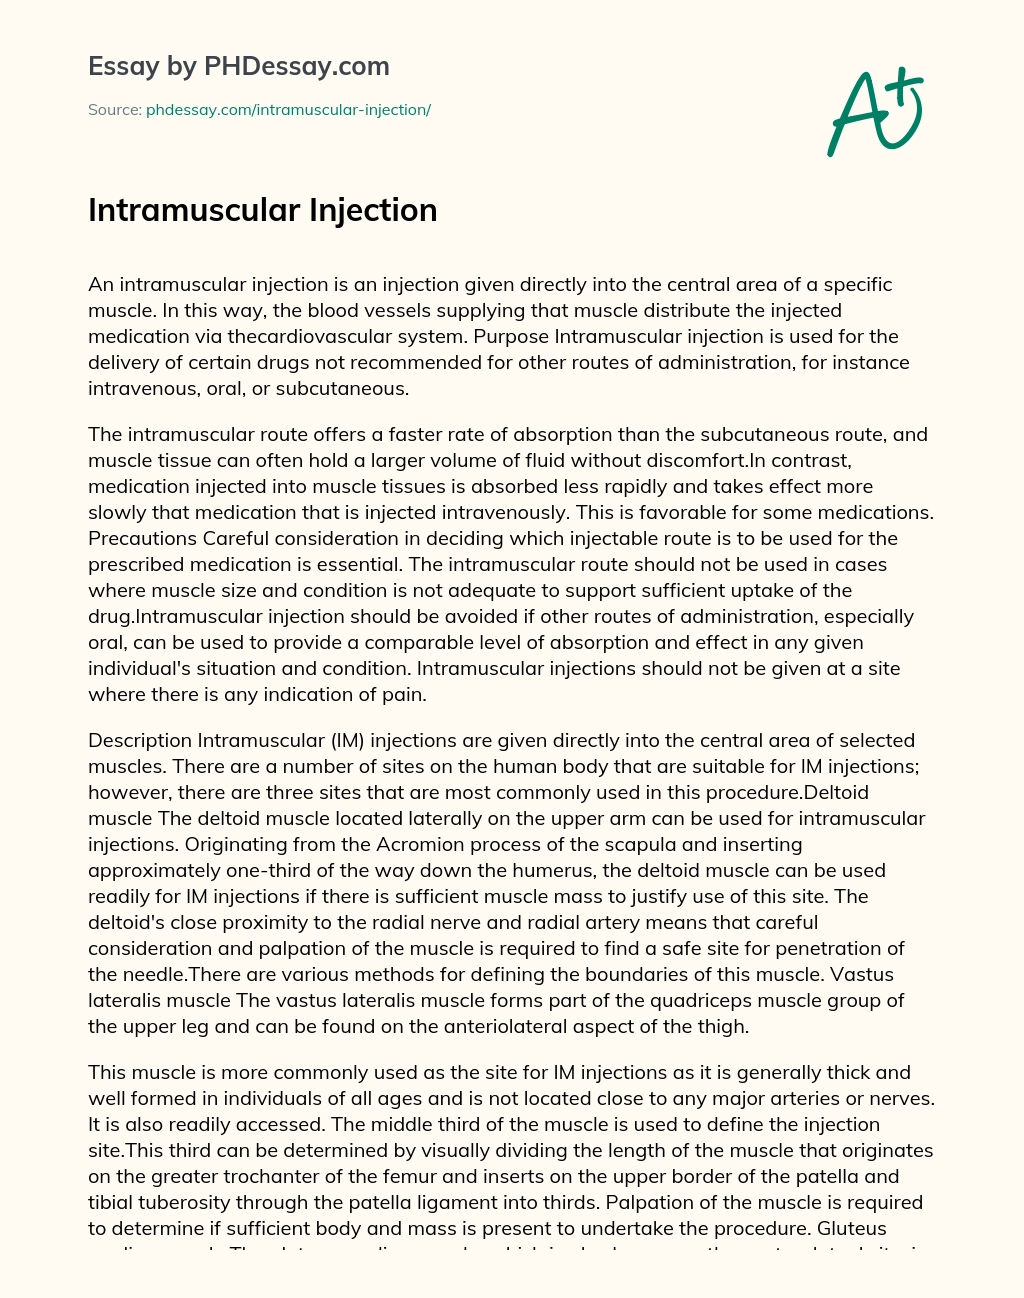 Intramuscular Injection essay